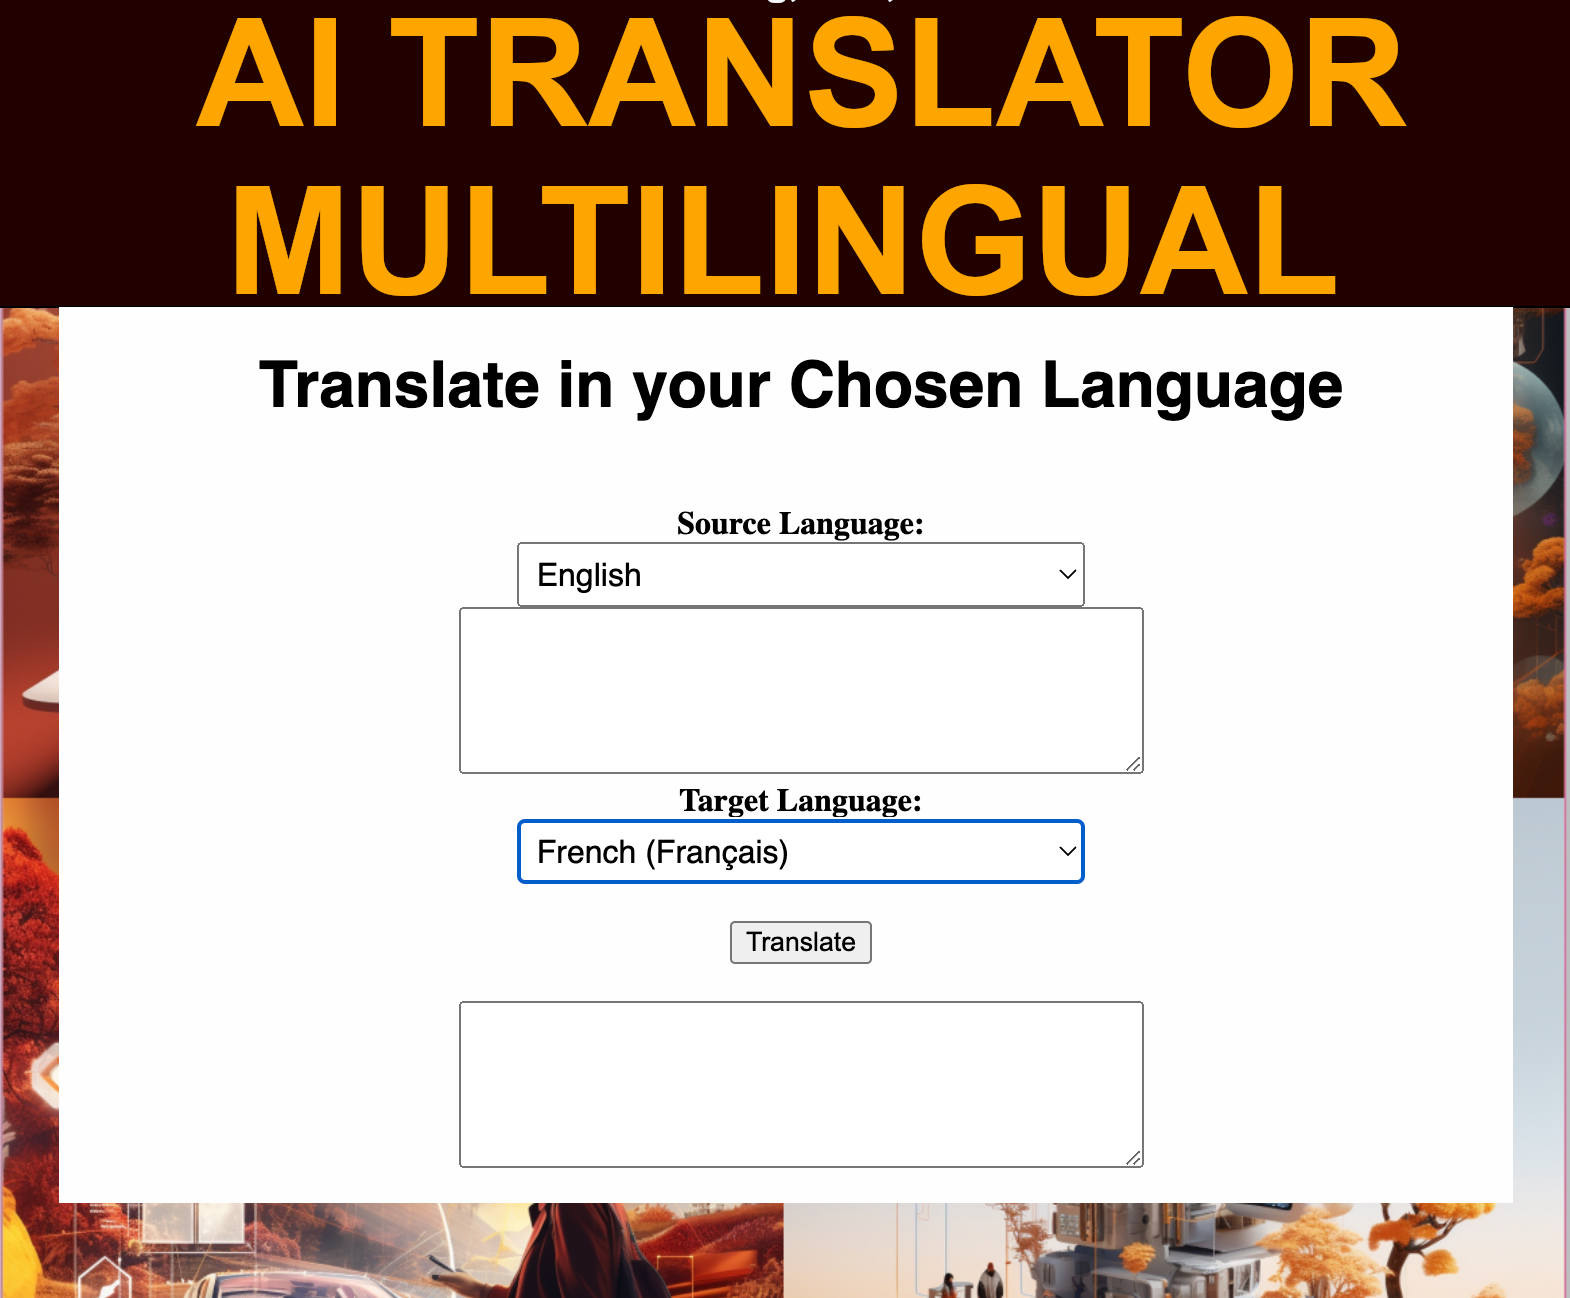 Translate Text in my chosen language